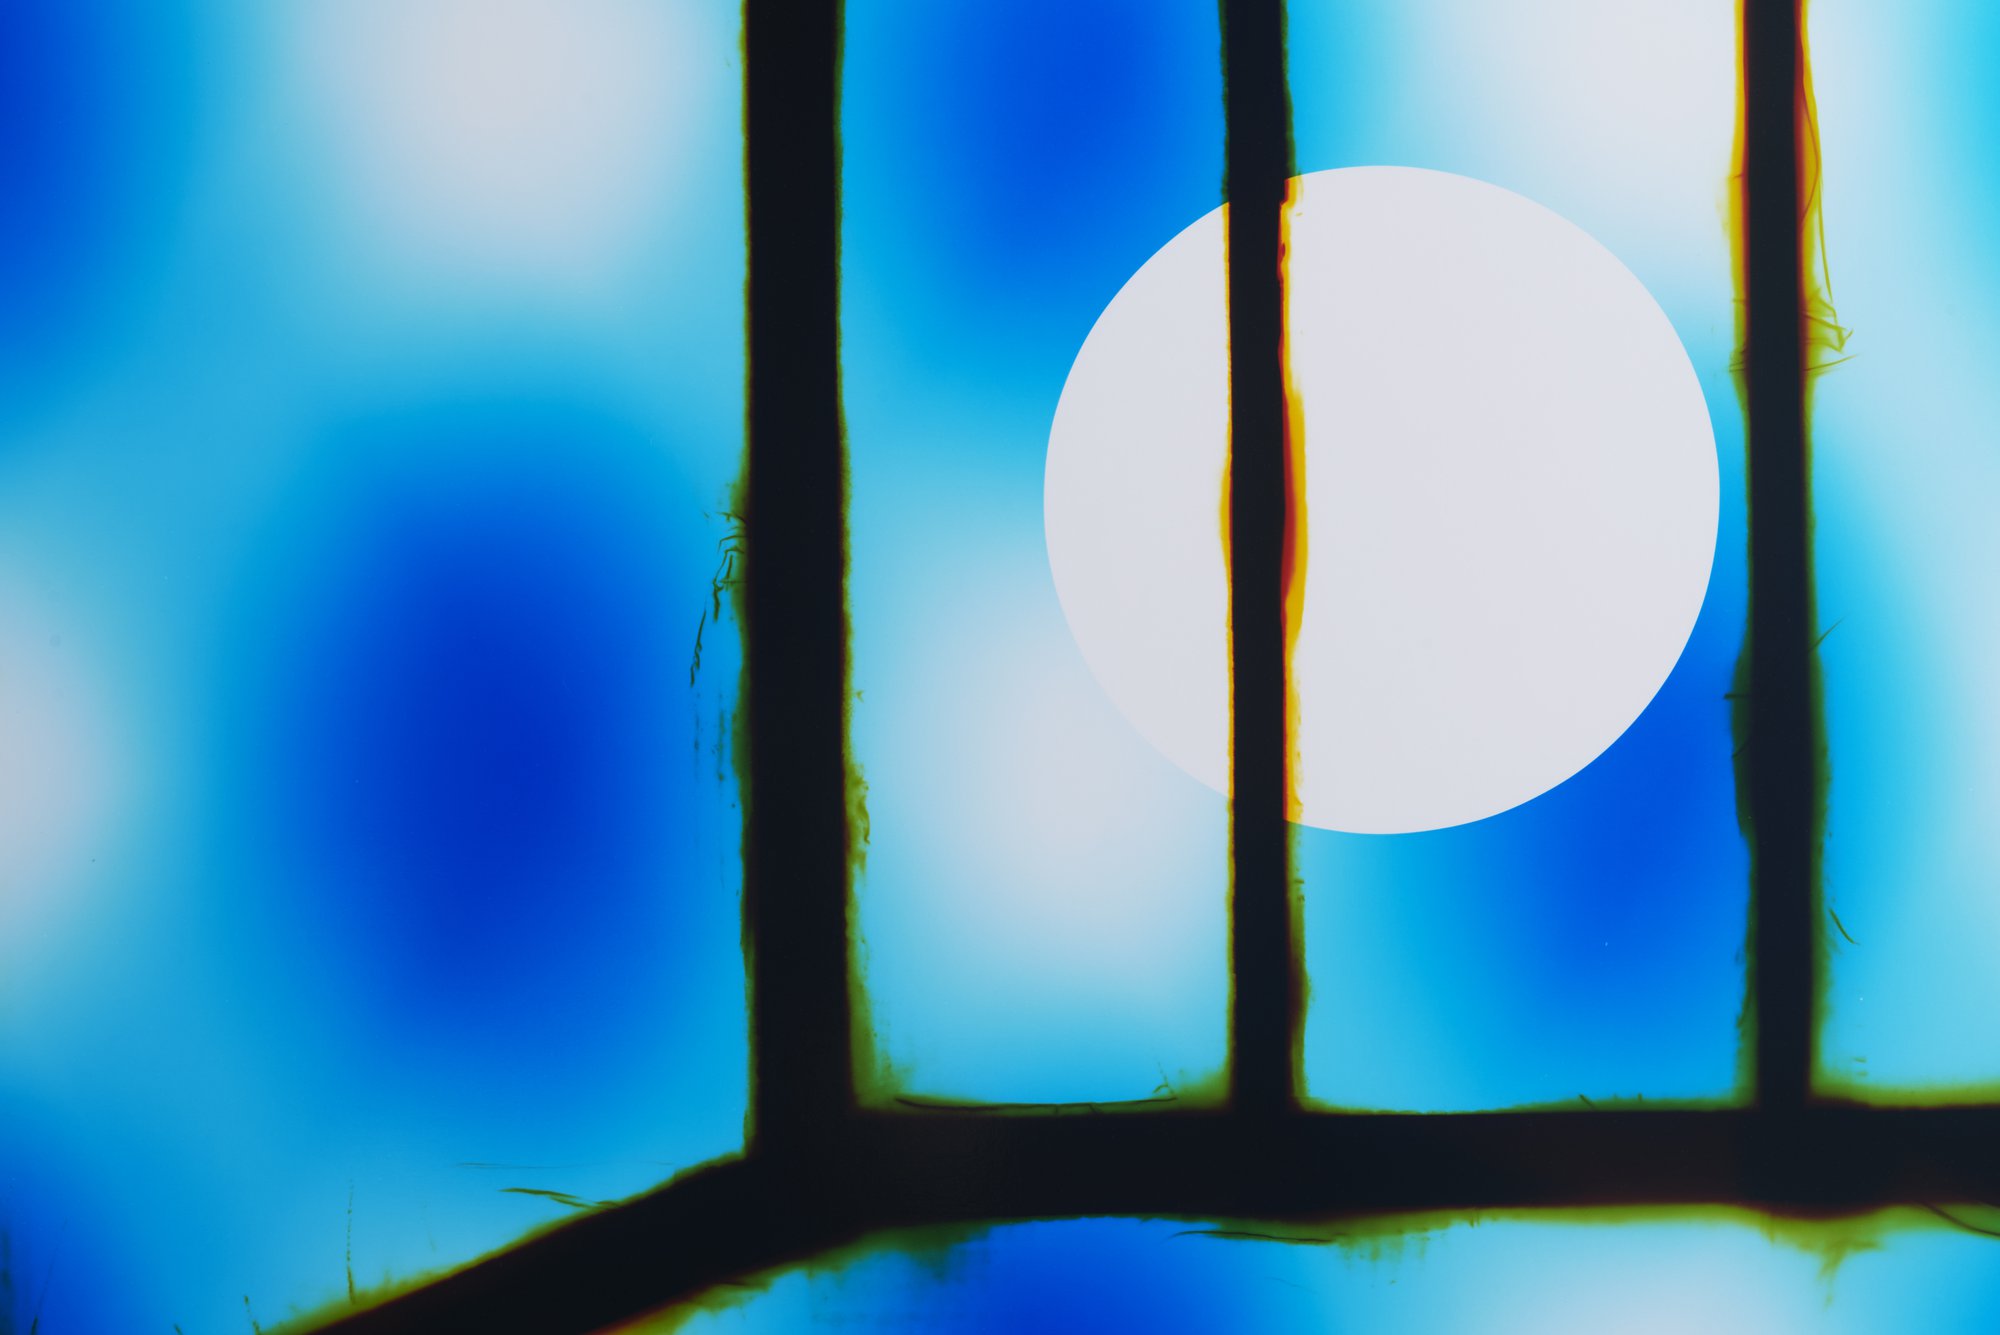 Hadi Fallahpisheh, Prison of Mind (Blue Corner), detail, light drawing on photosensitive paper, 106 x 185 x 5 cm, 2021